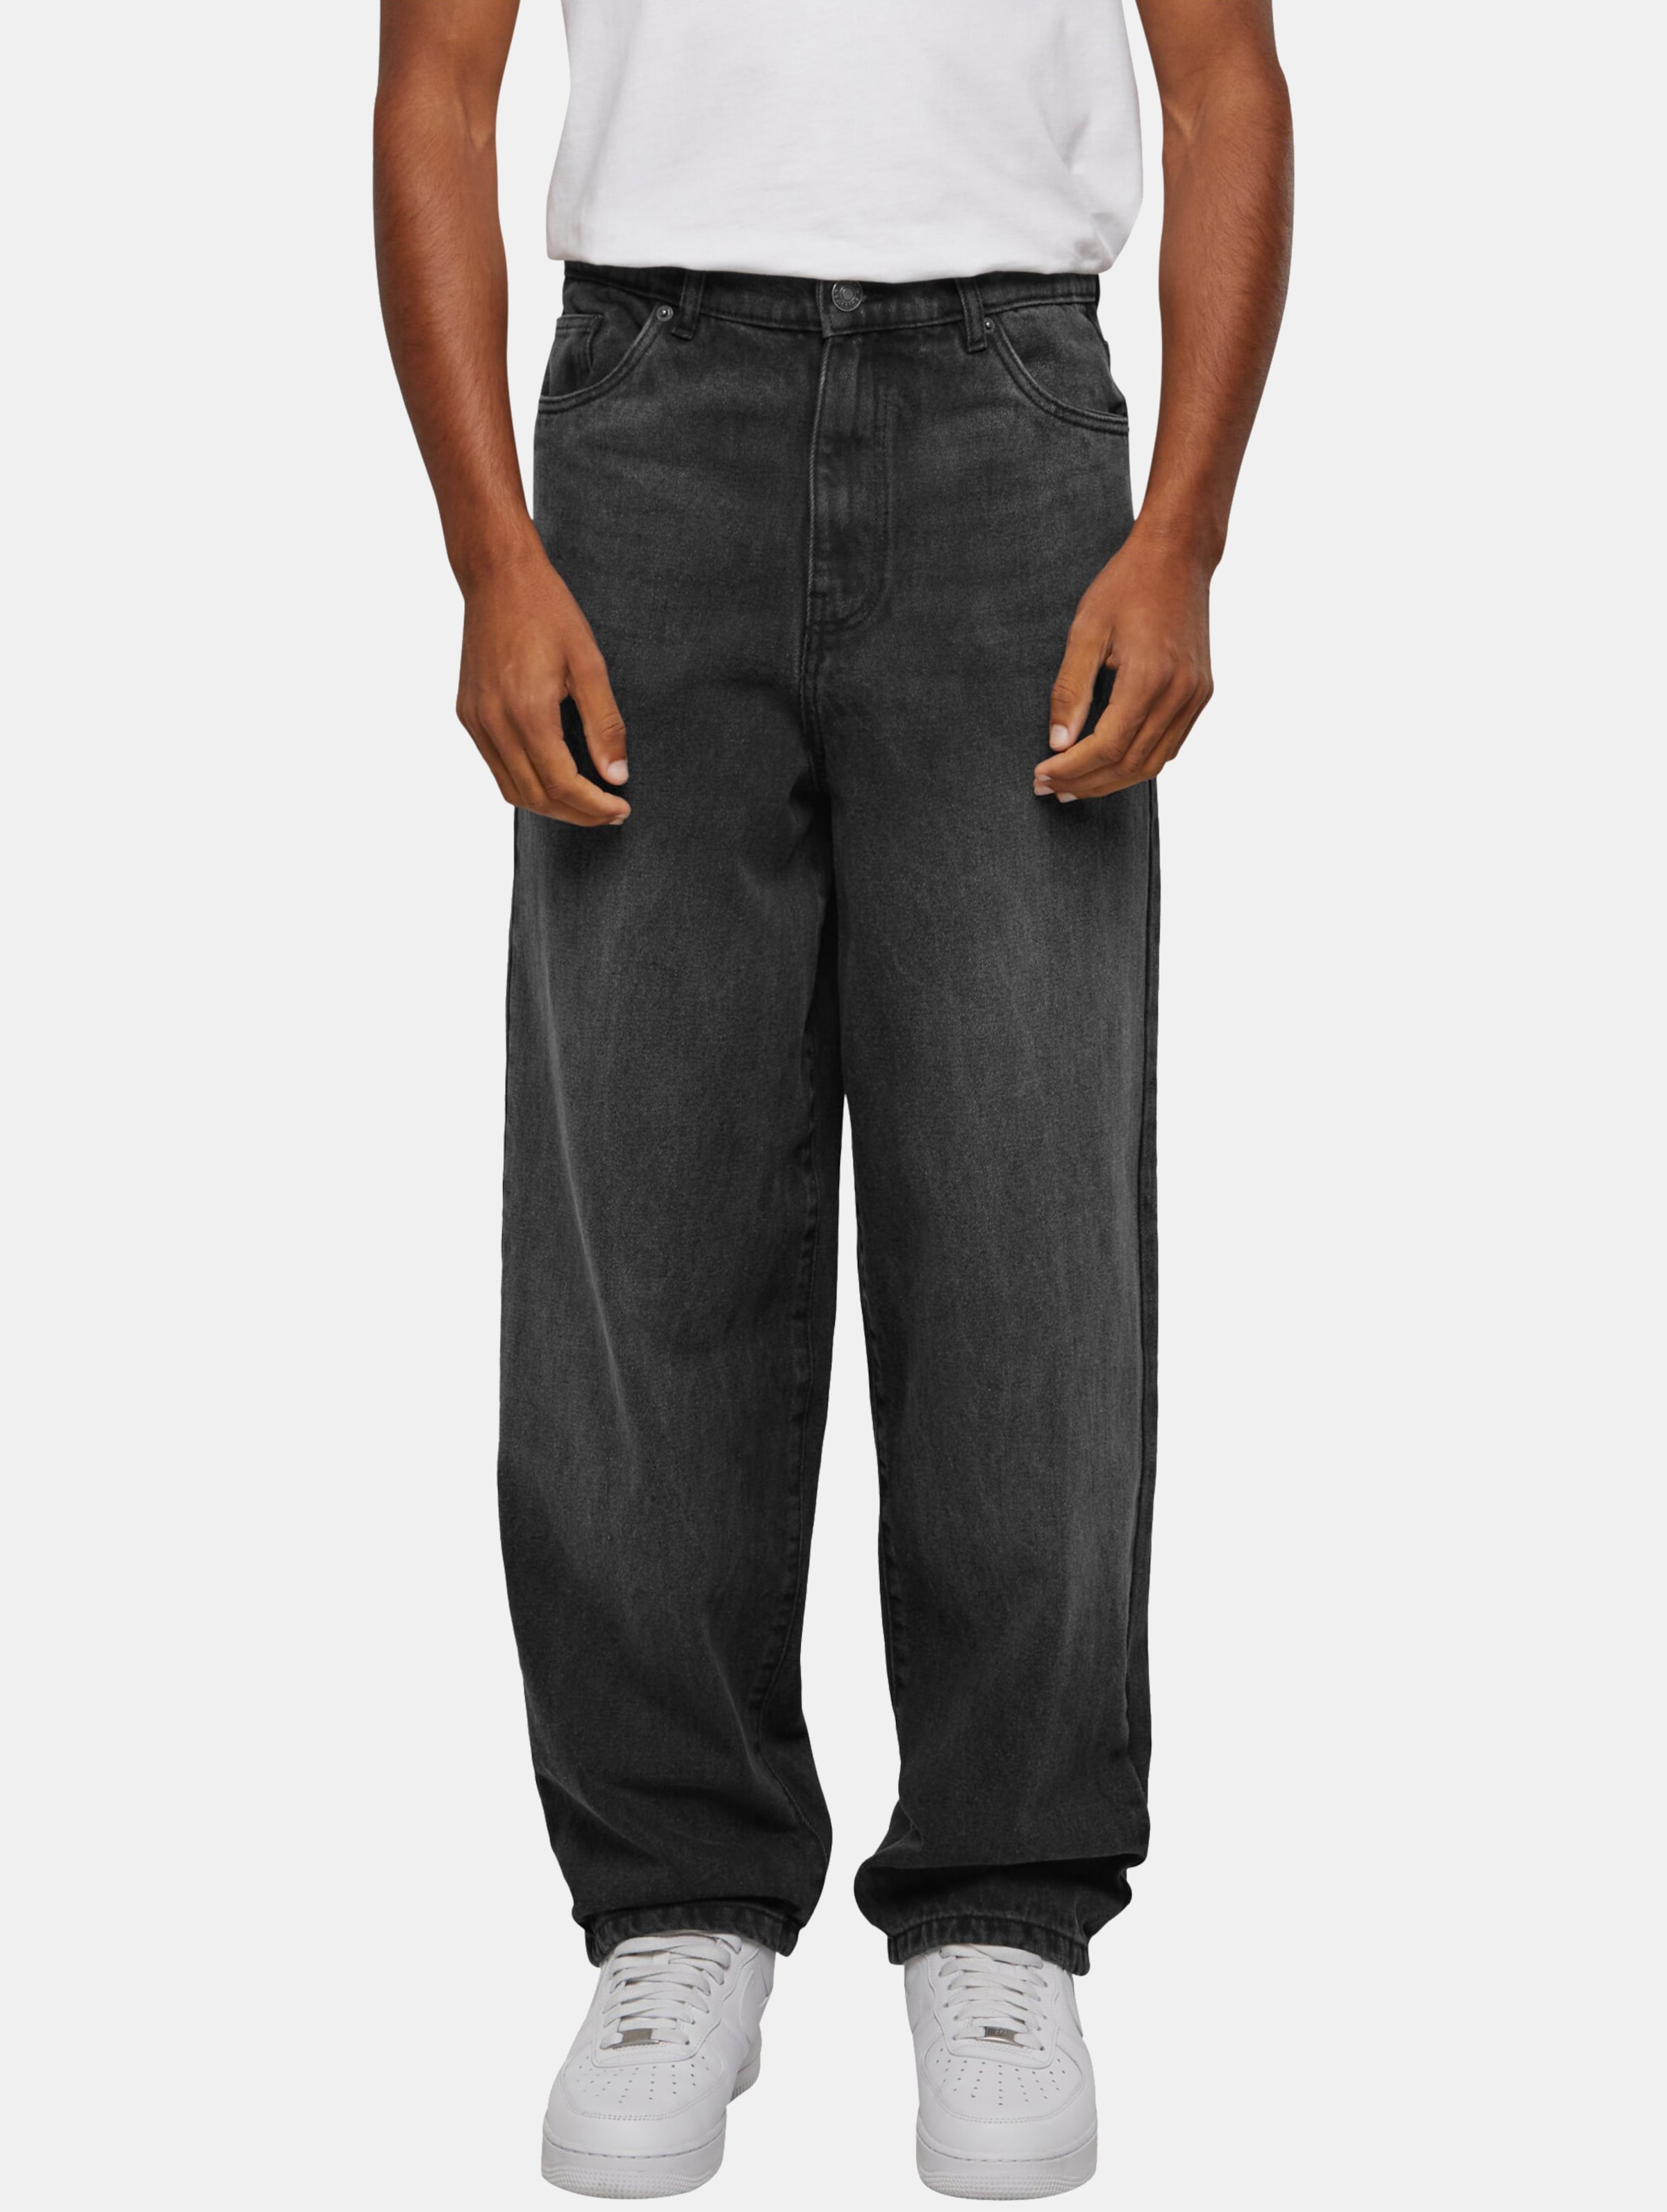 Urban Classics - Heavy Ounce Baggy Fit Jeans Wijde broek - Taille, 34 inch - Zwart